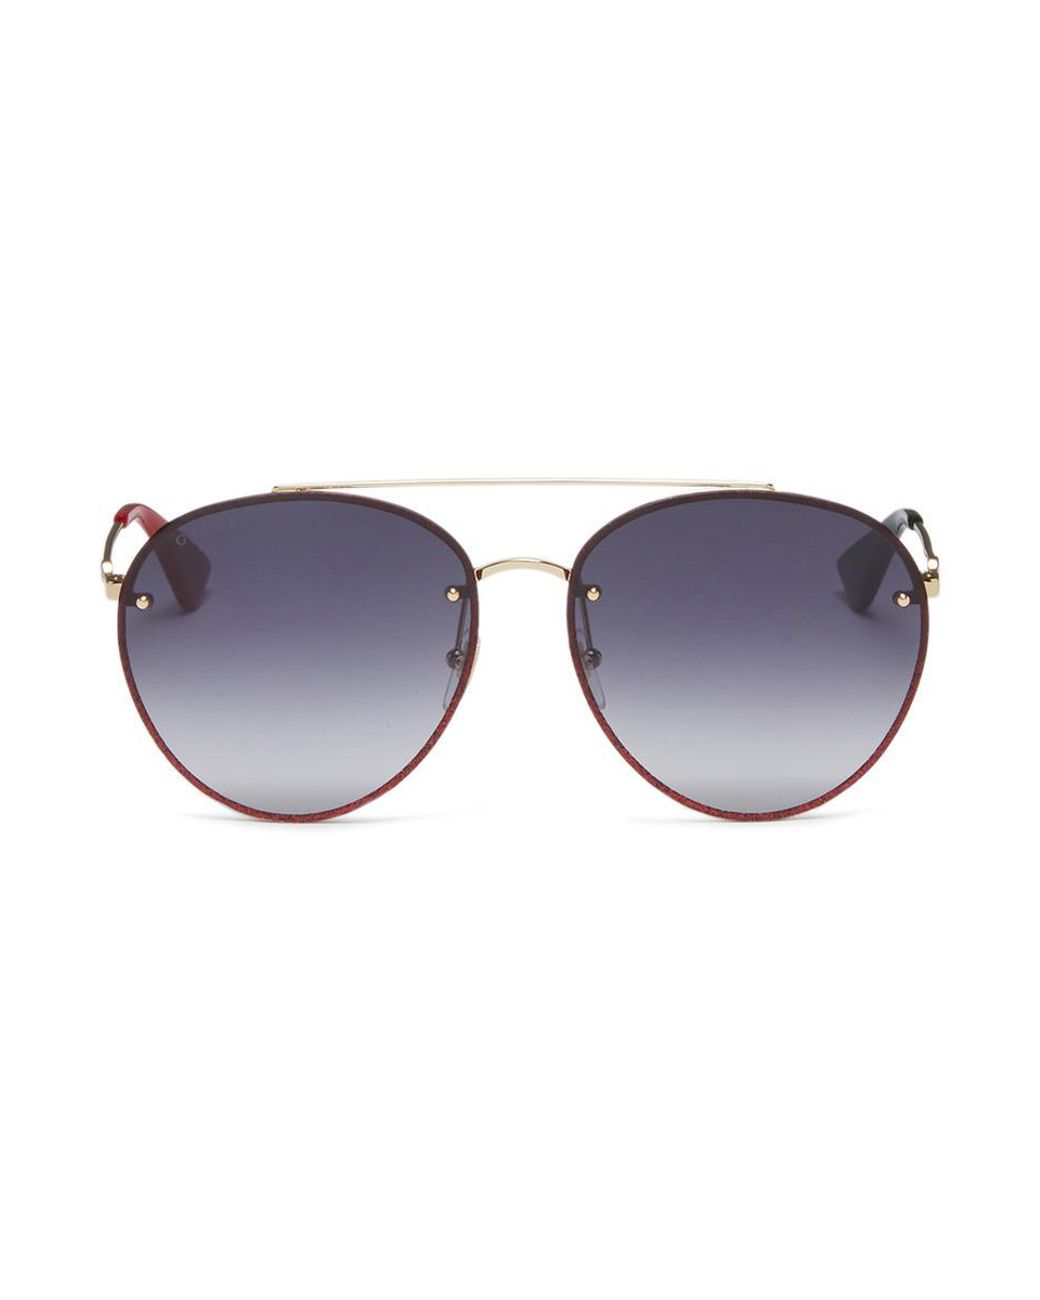 Buy Gucci Aviator Sunglasses With Original Design Details - Optiqool